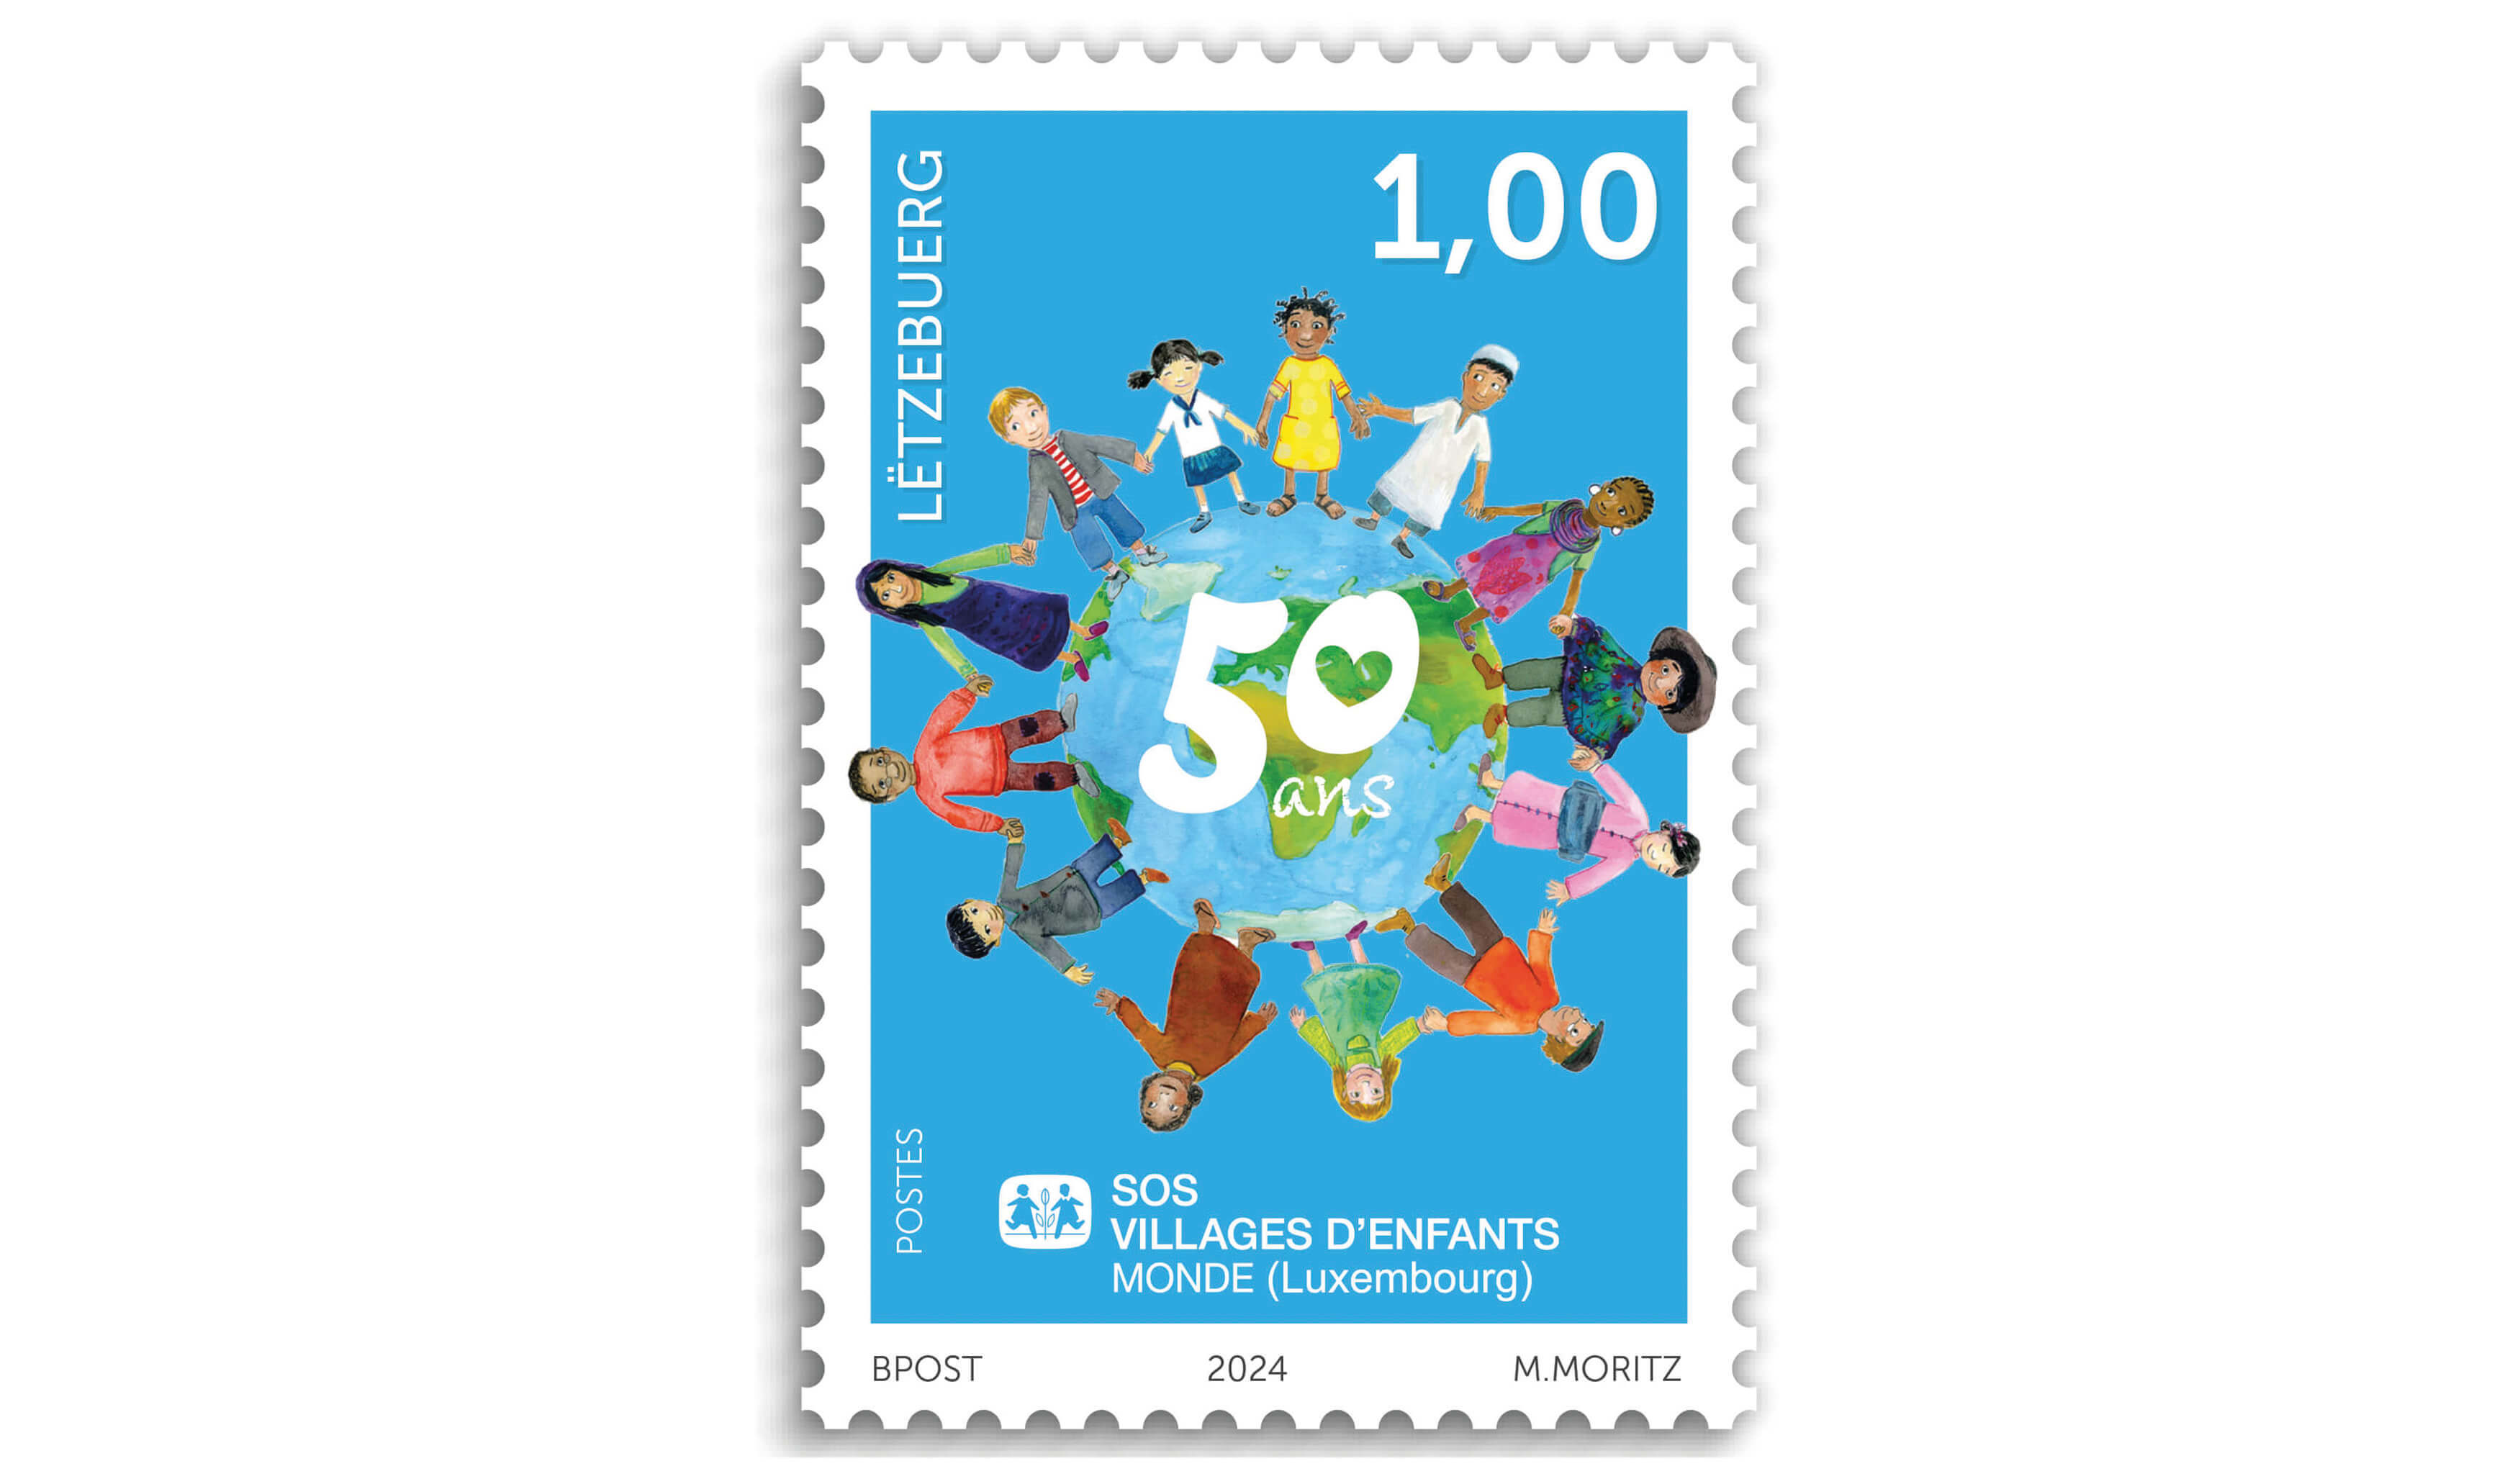 50 years of SOS Villages d'Enfants Monde